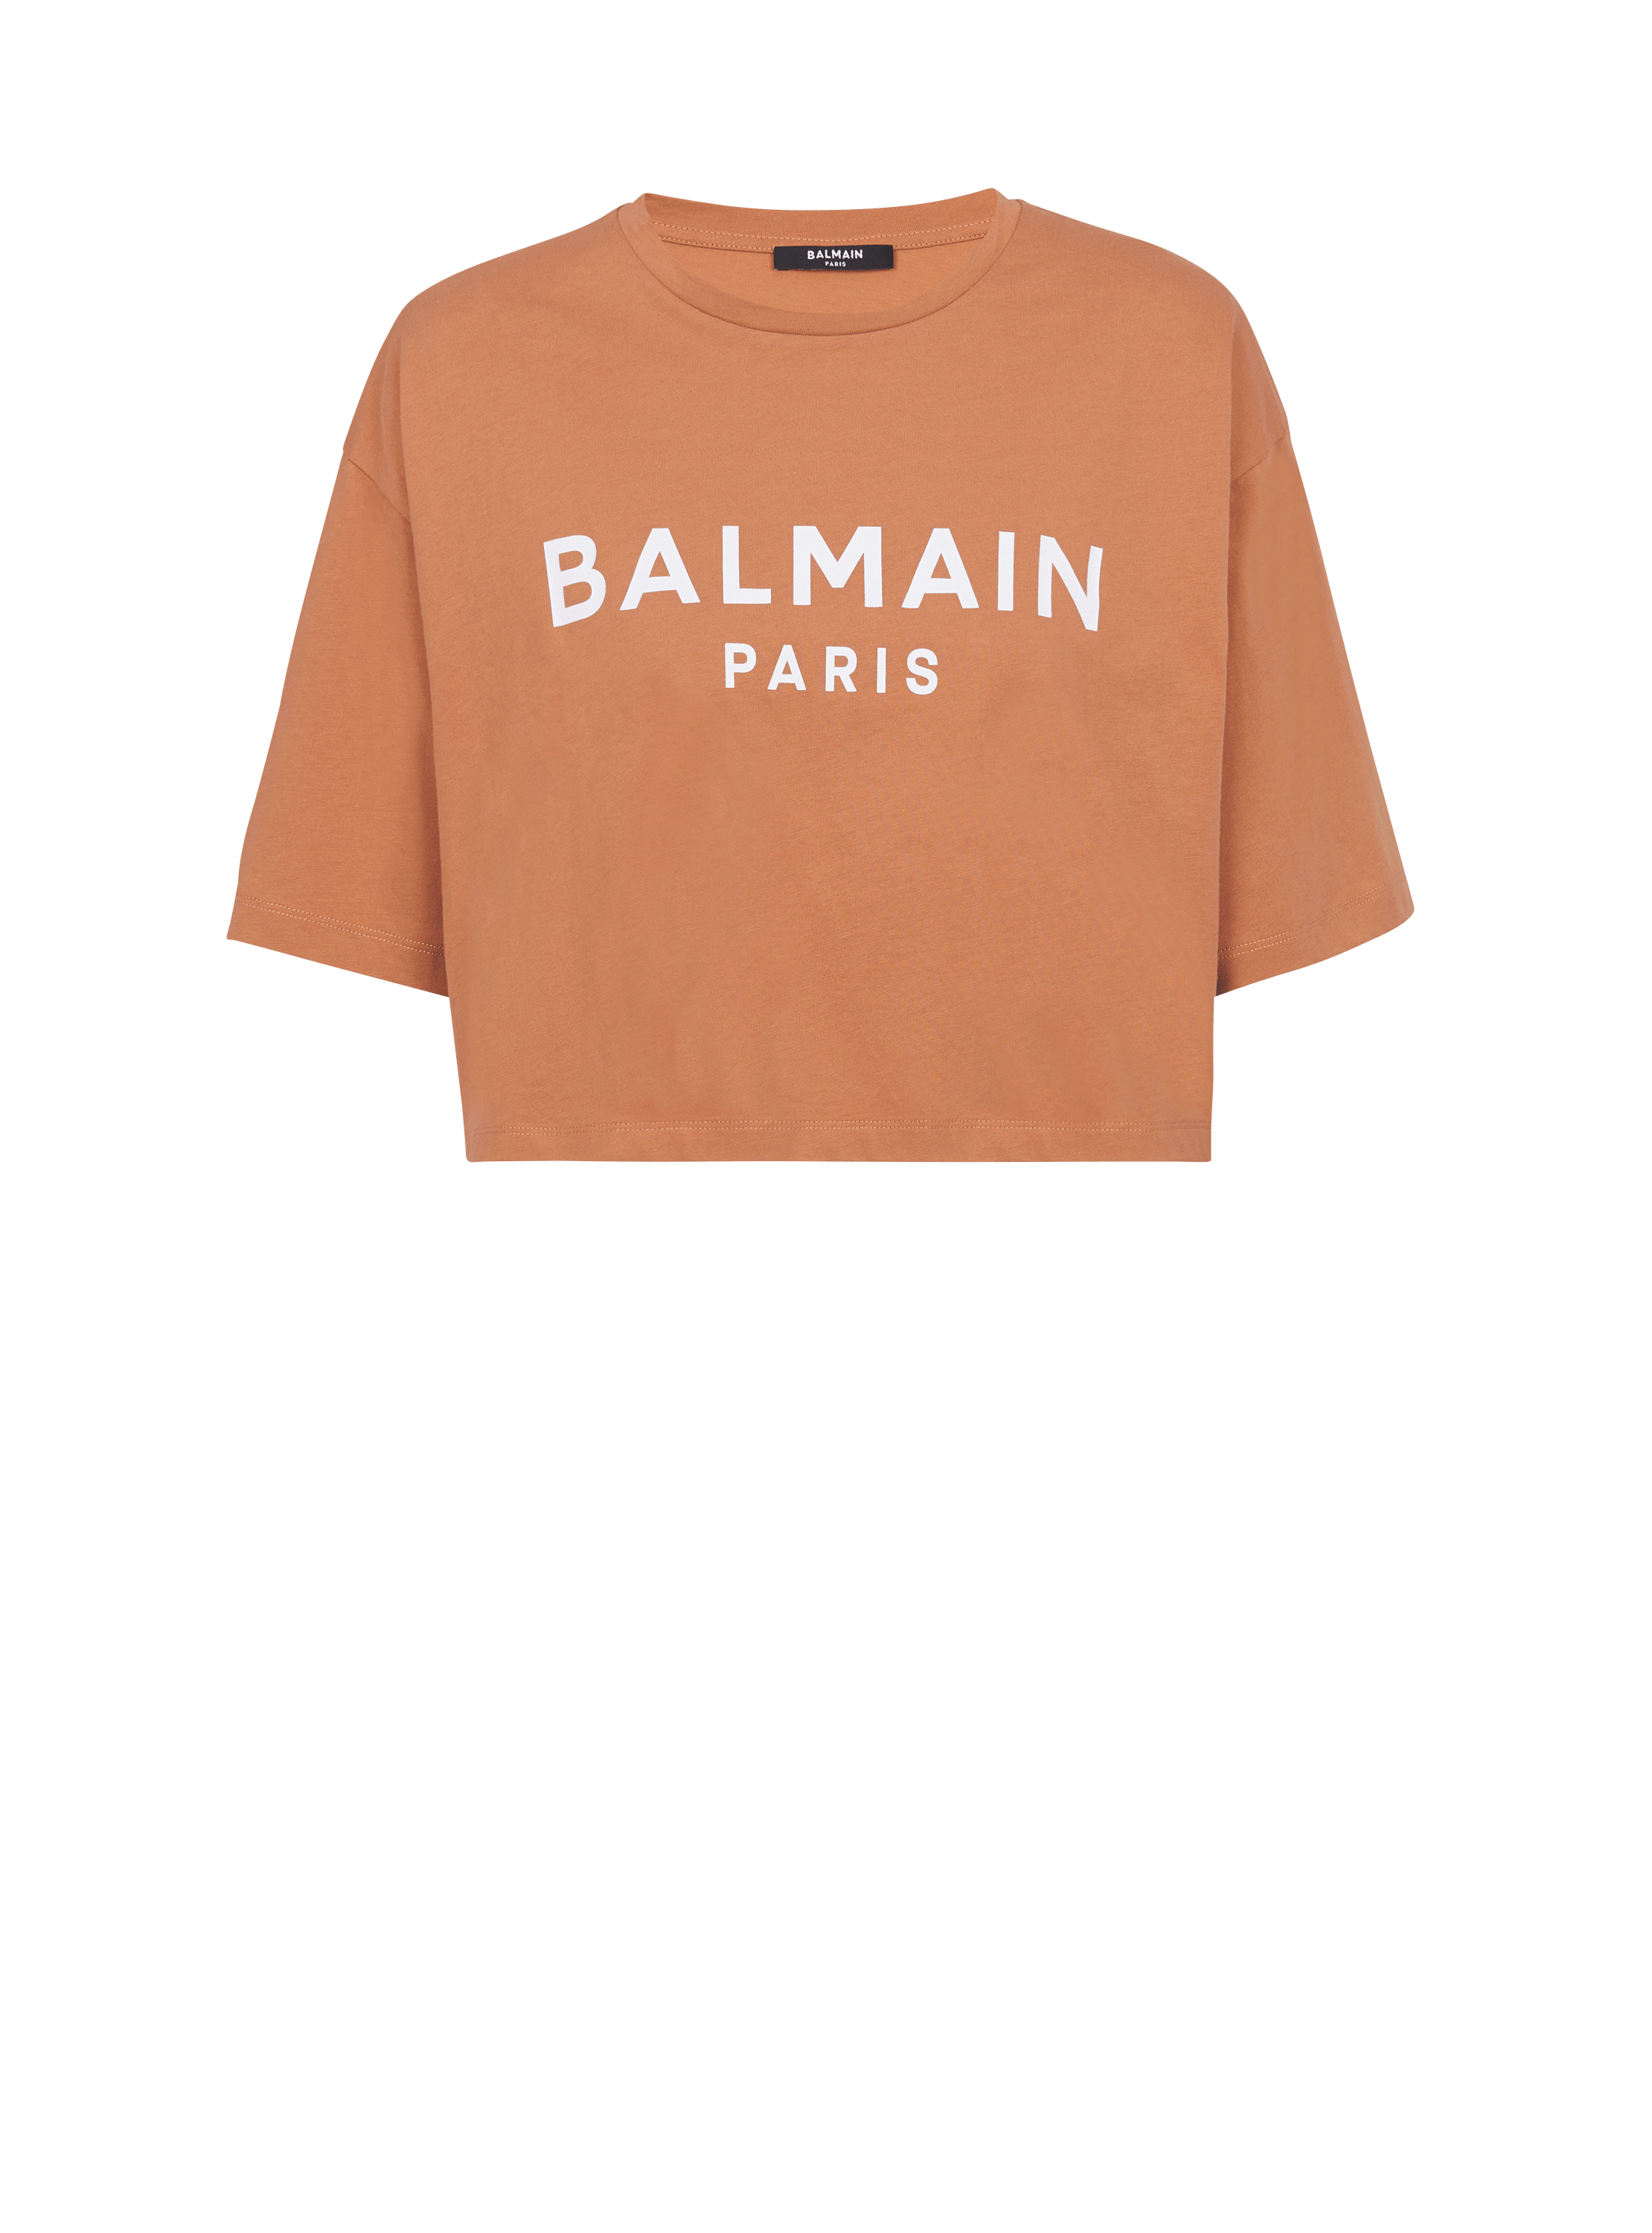 T-shirt corta con logo Balmain stampato, marrone, hi-res